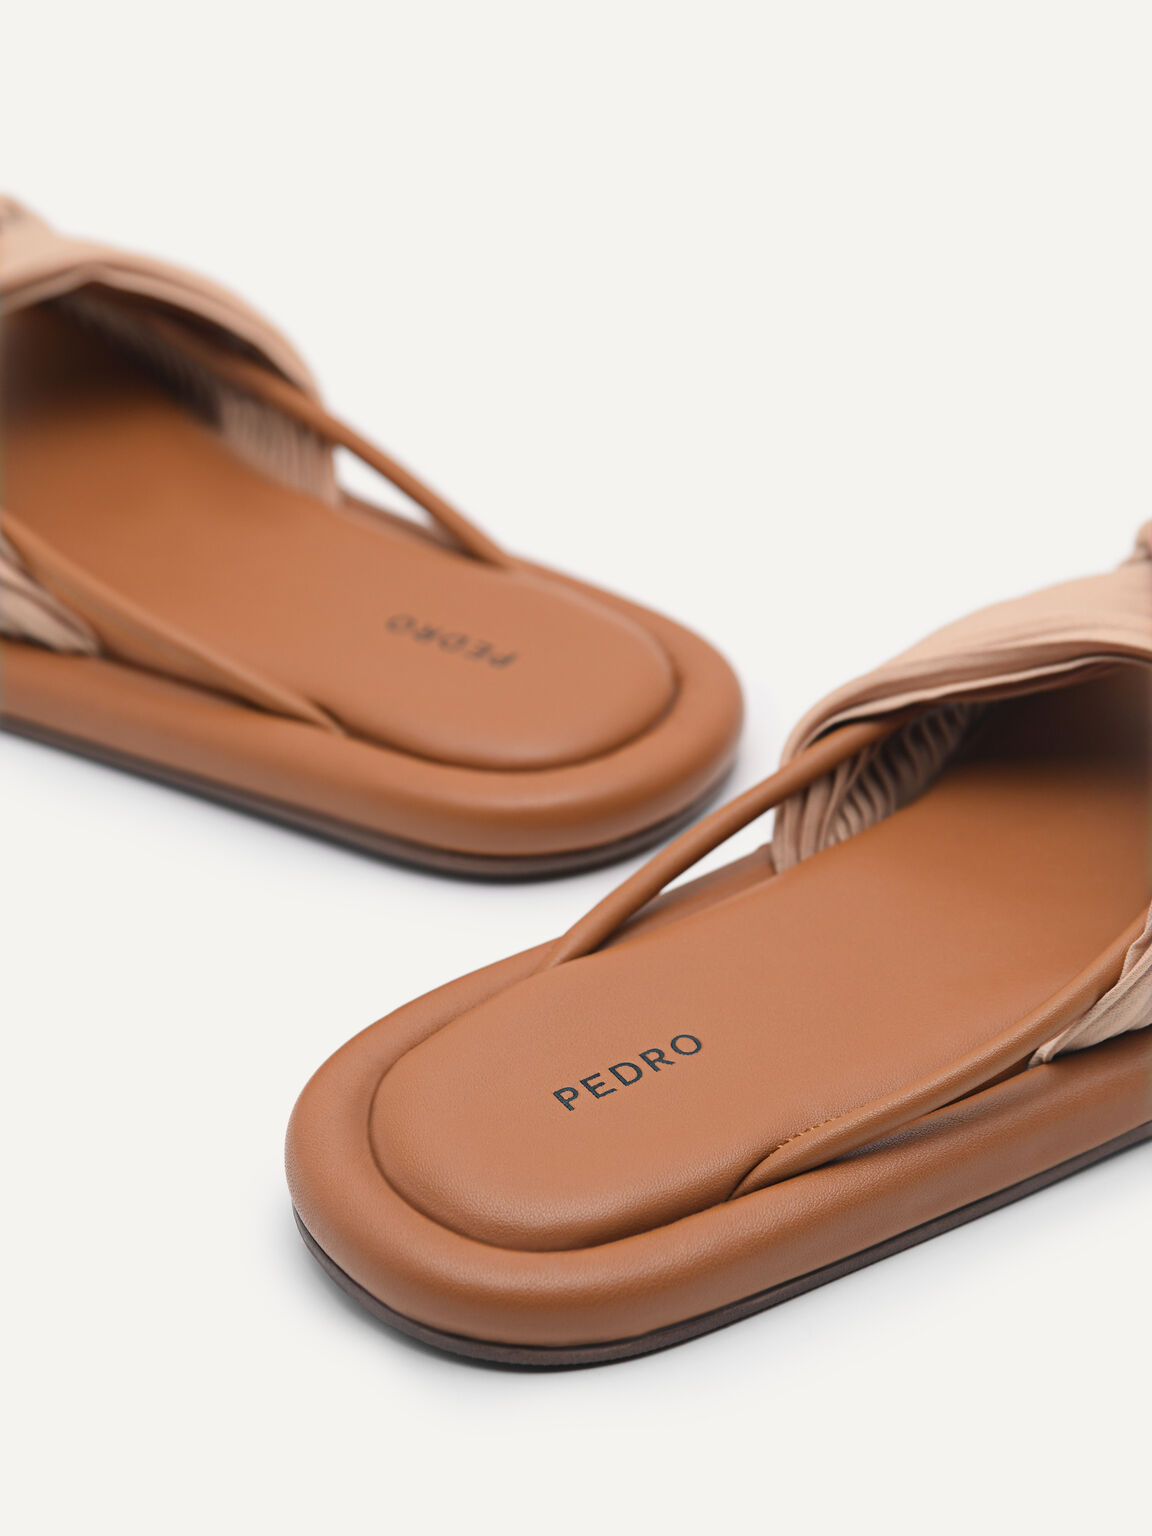 rePEDRO Pleated Sandals, Nude, hi-res